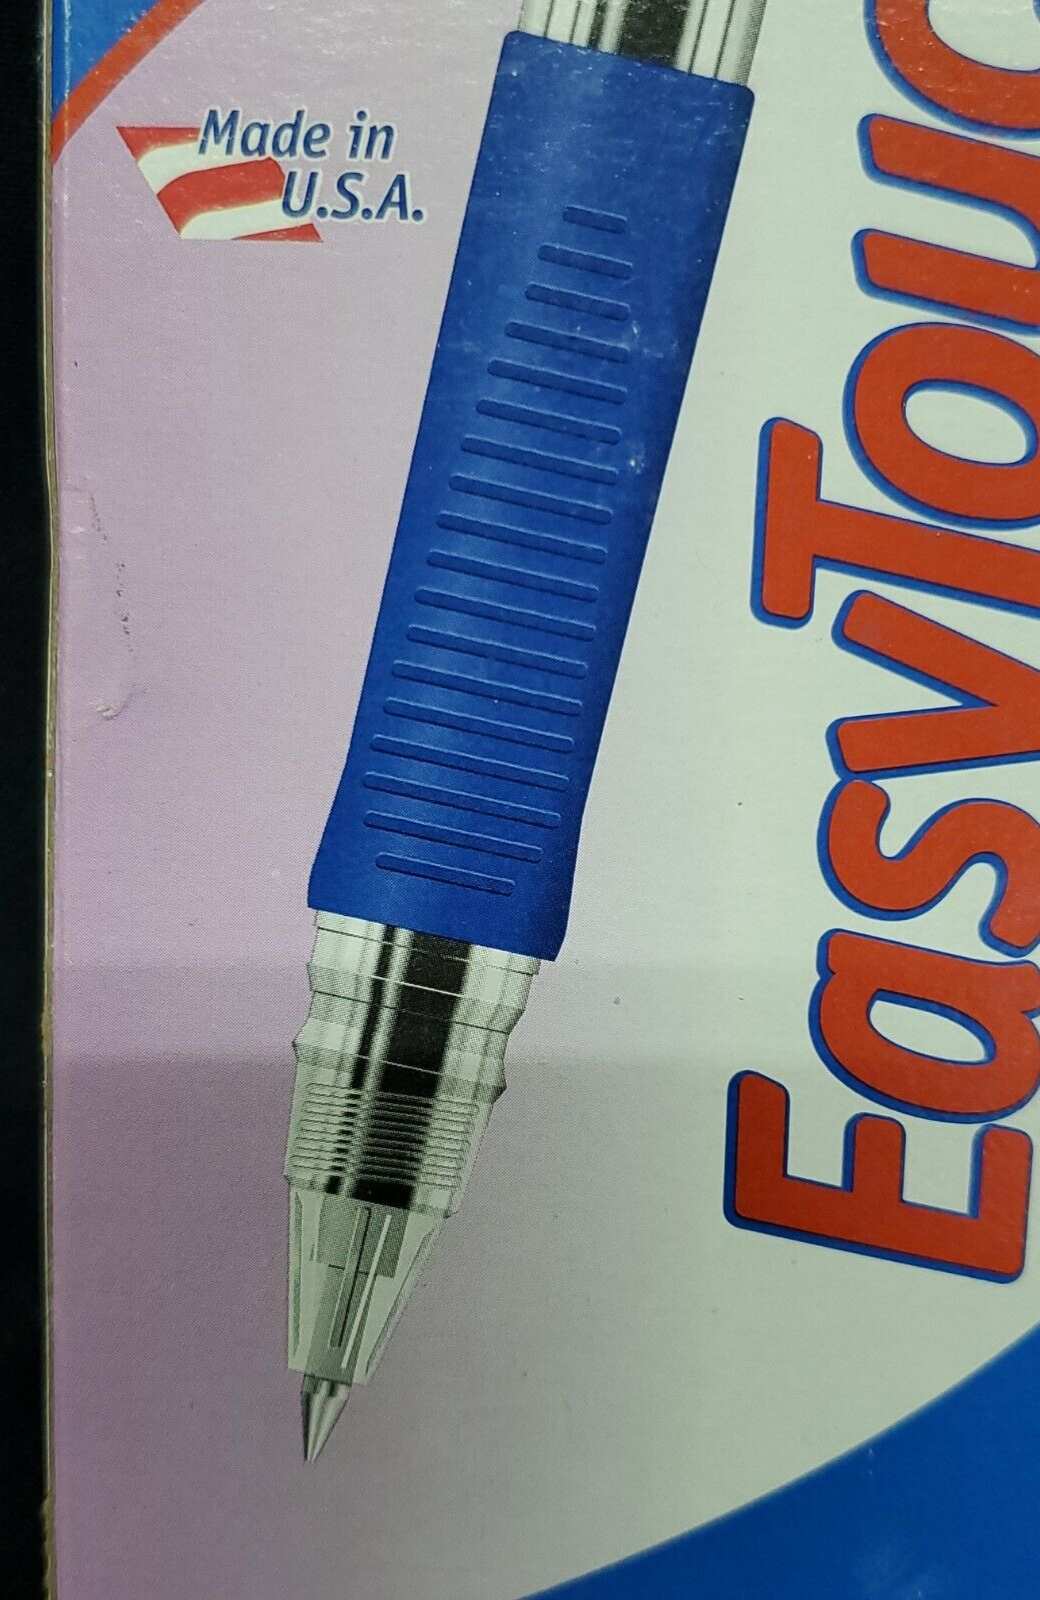 PILOT EasyTouch Ballpoint Stick Pens, Fine Point, Blue Ink, 12-Pack (32002)  - BND Treasure Chest